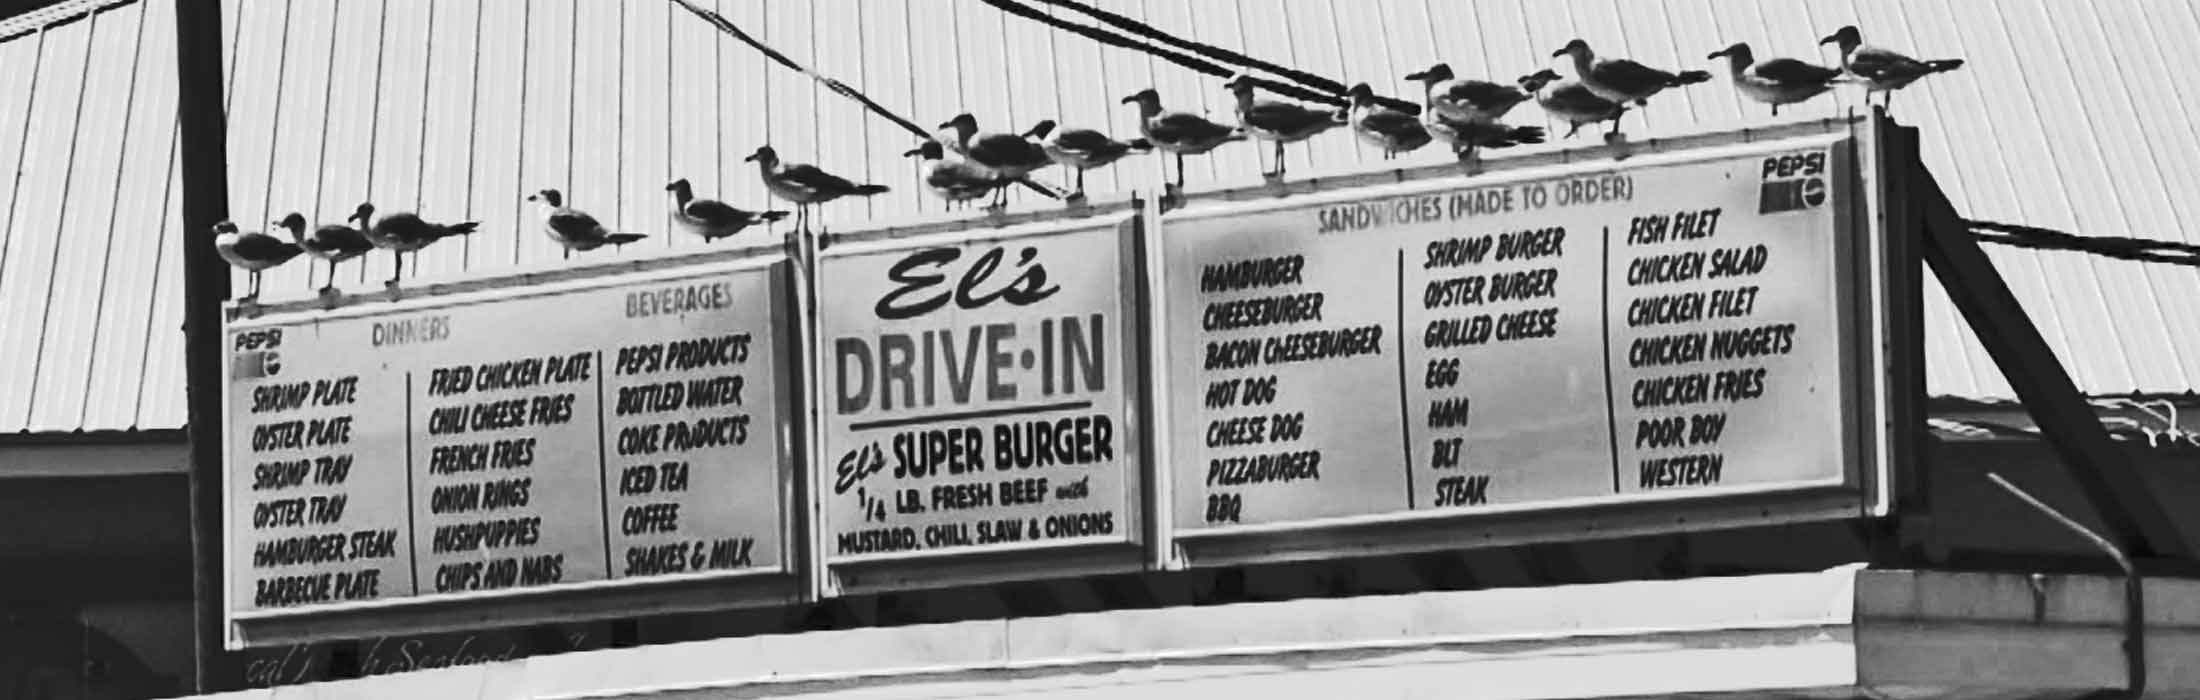 Vintage menu from El's Drive-In Restaurant in Morehead City, NC